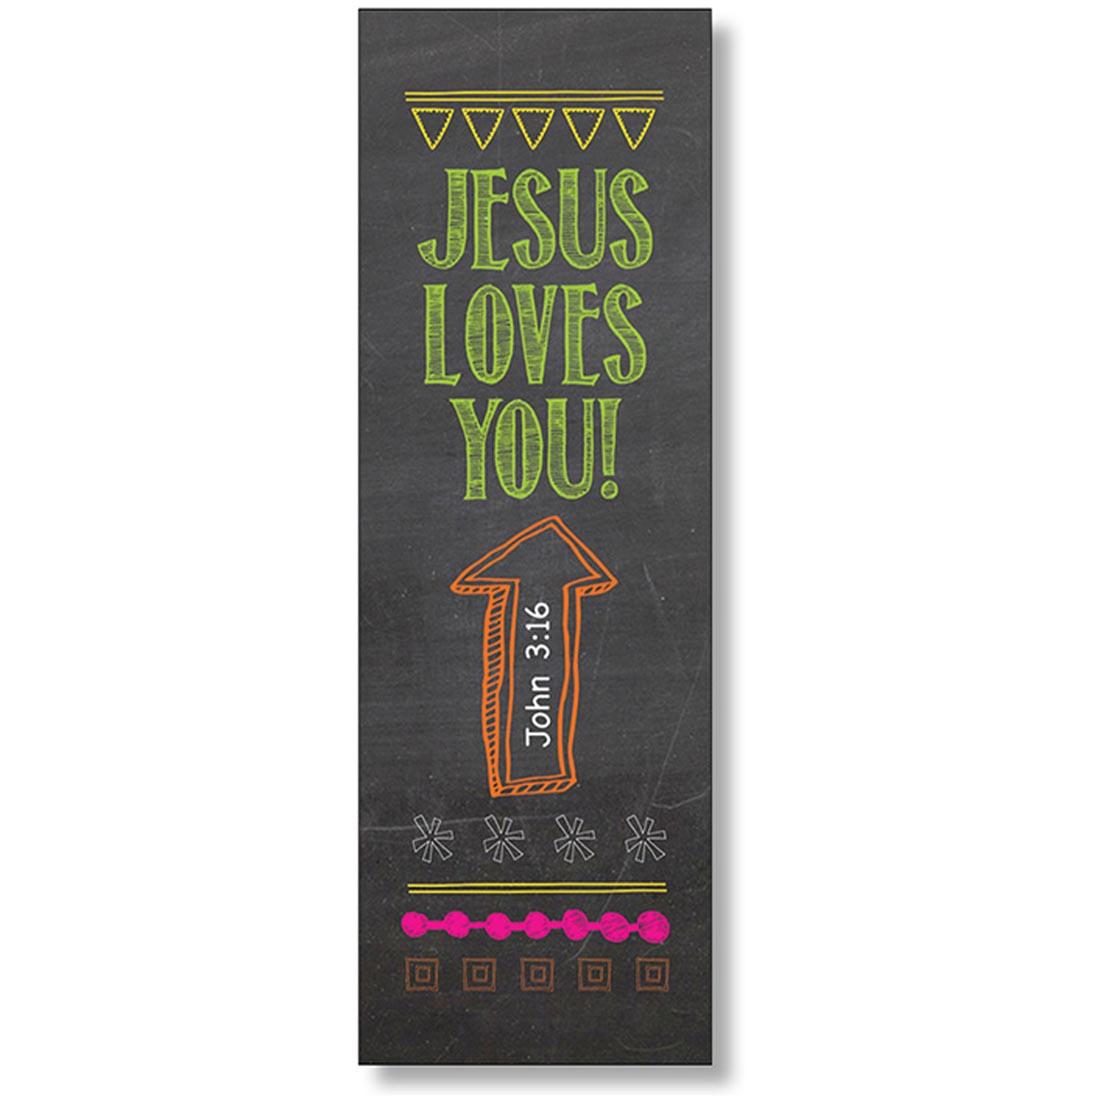 Jesus Loves You Bookmark in chalkboard style